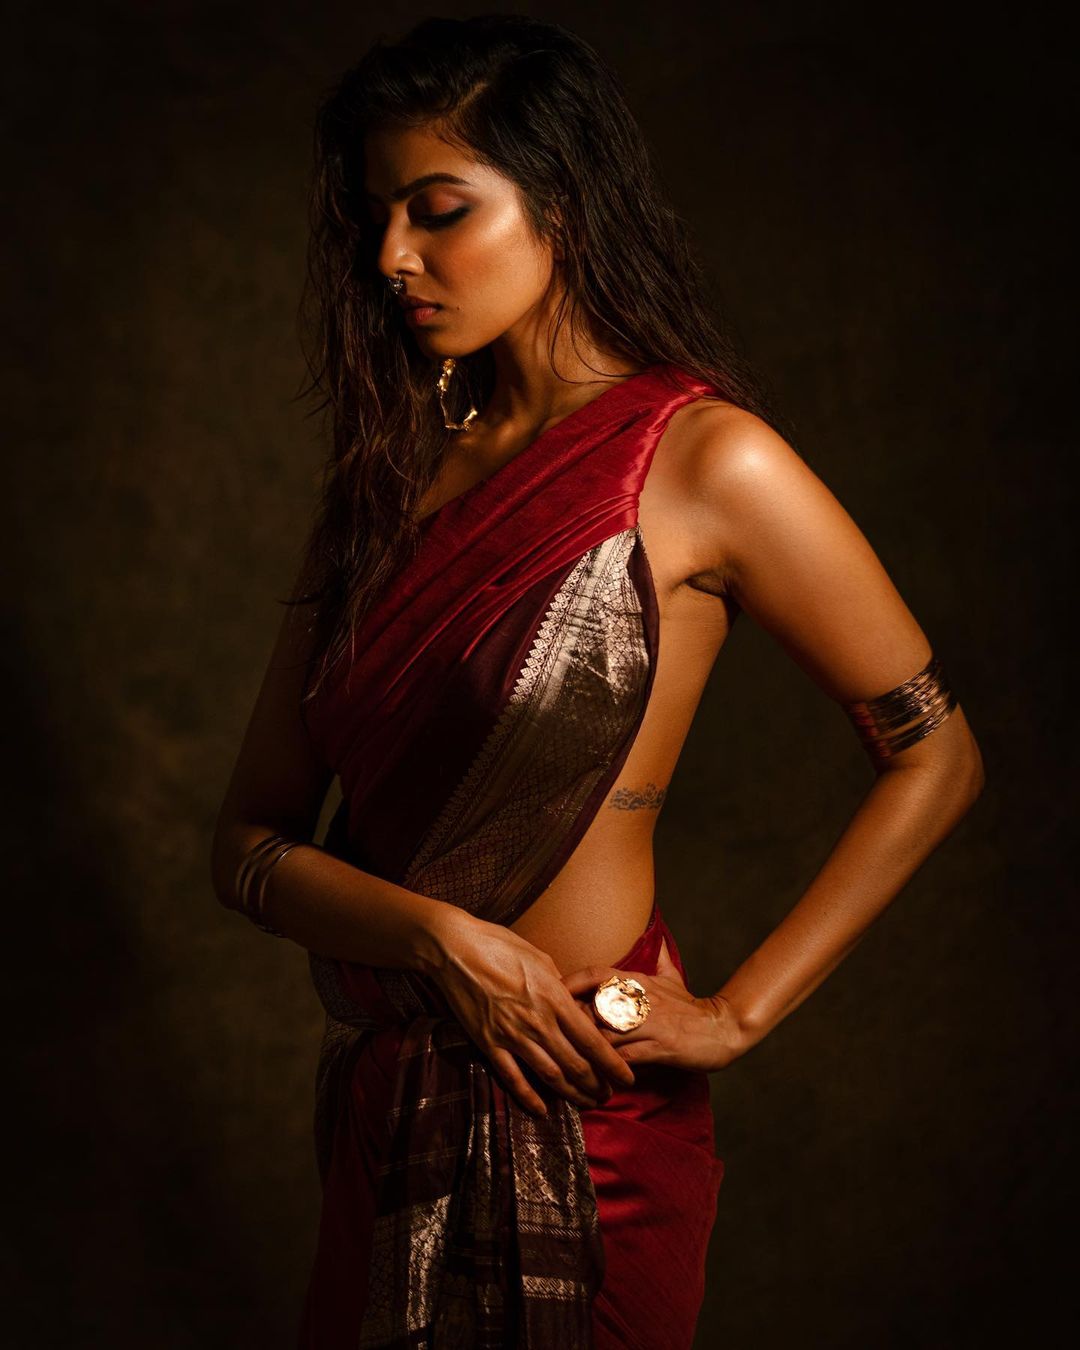 Malavika Mohanan poses like a vintage warrior princess